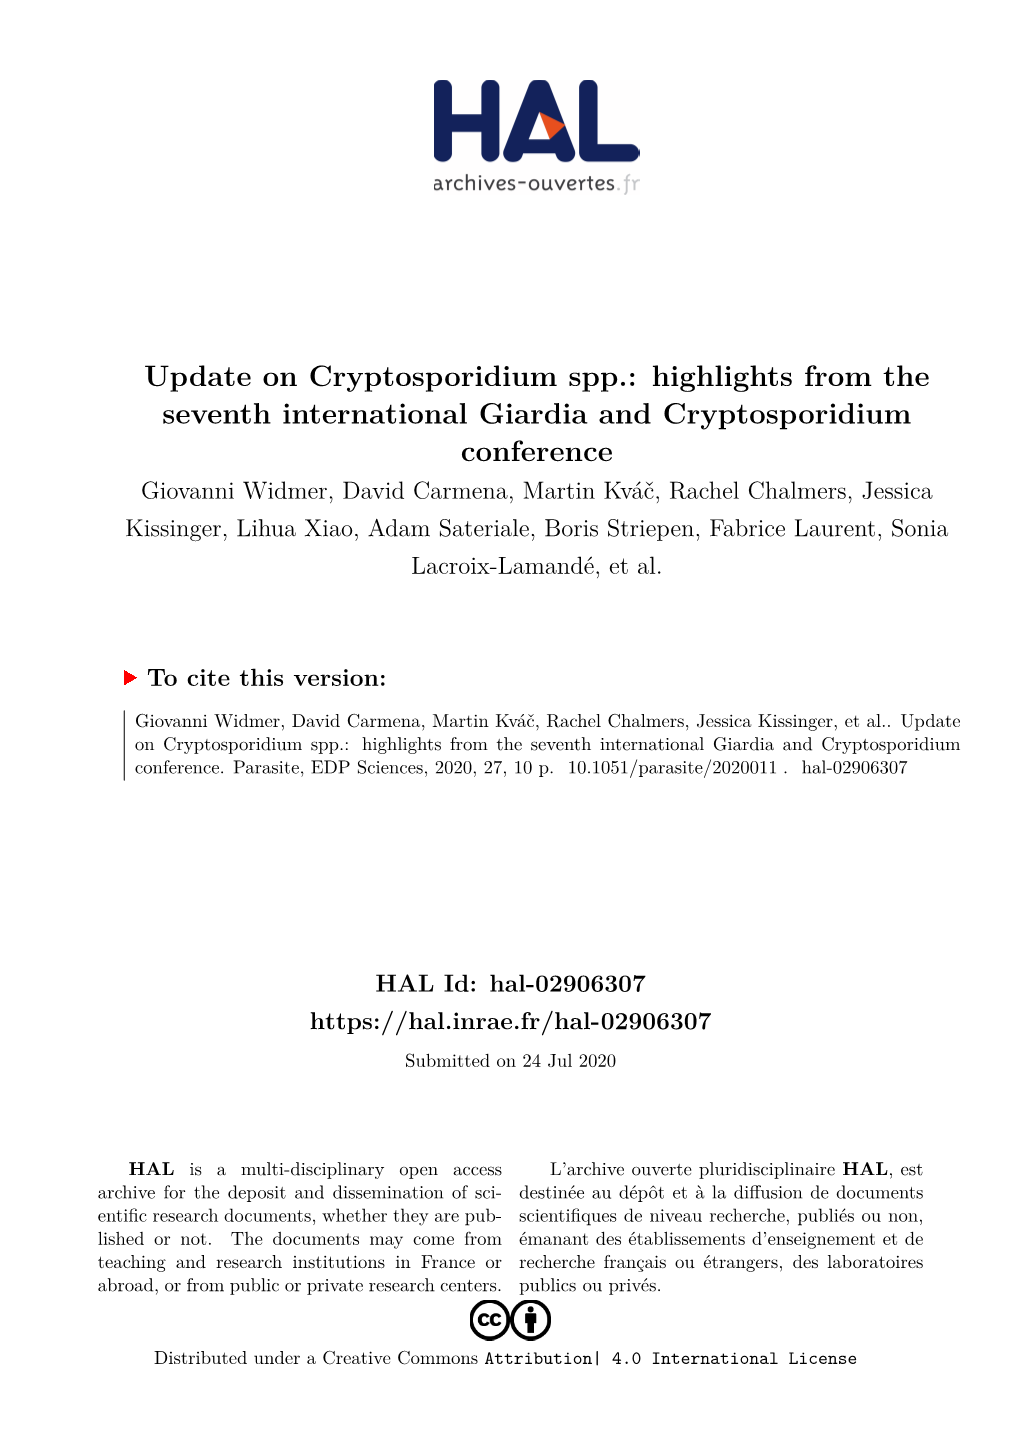 Update on Cryptosporidium Spp